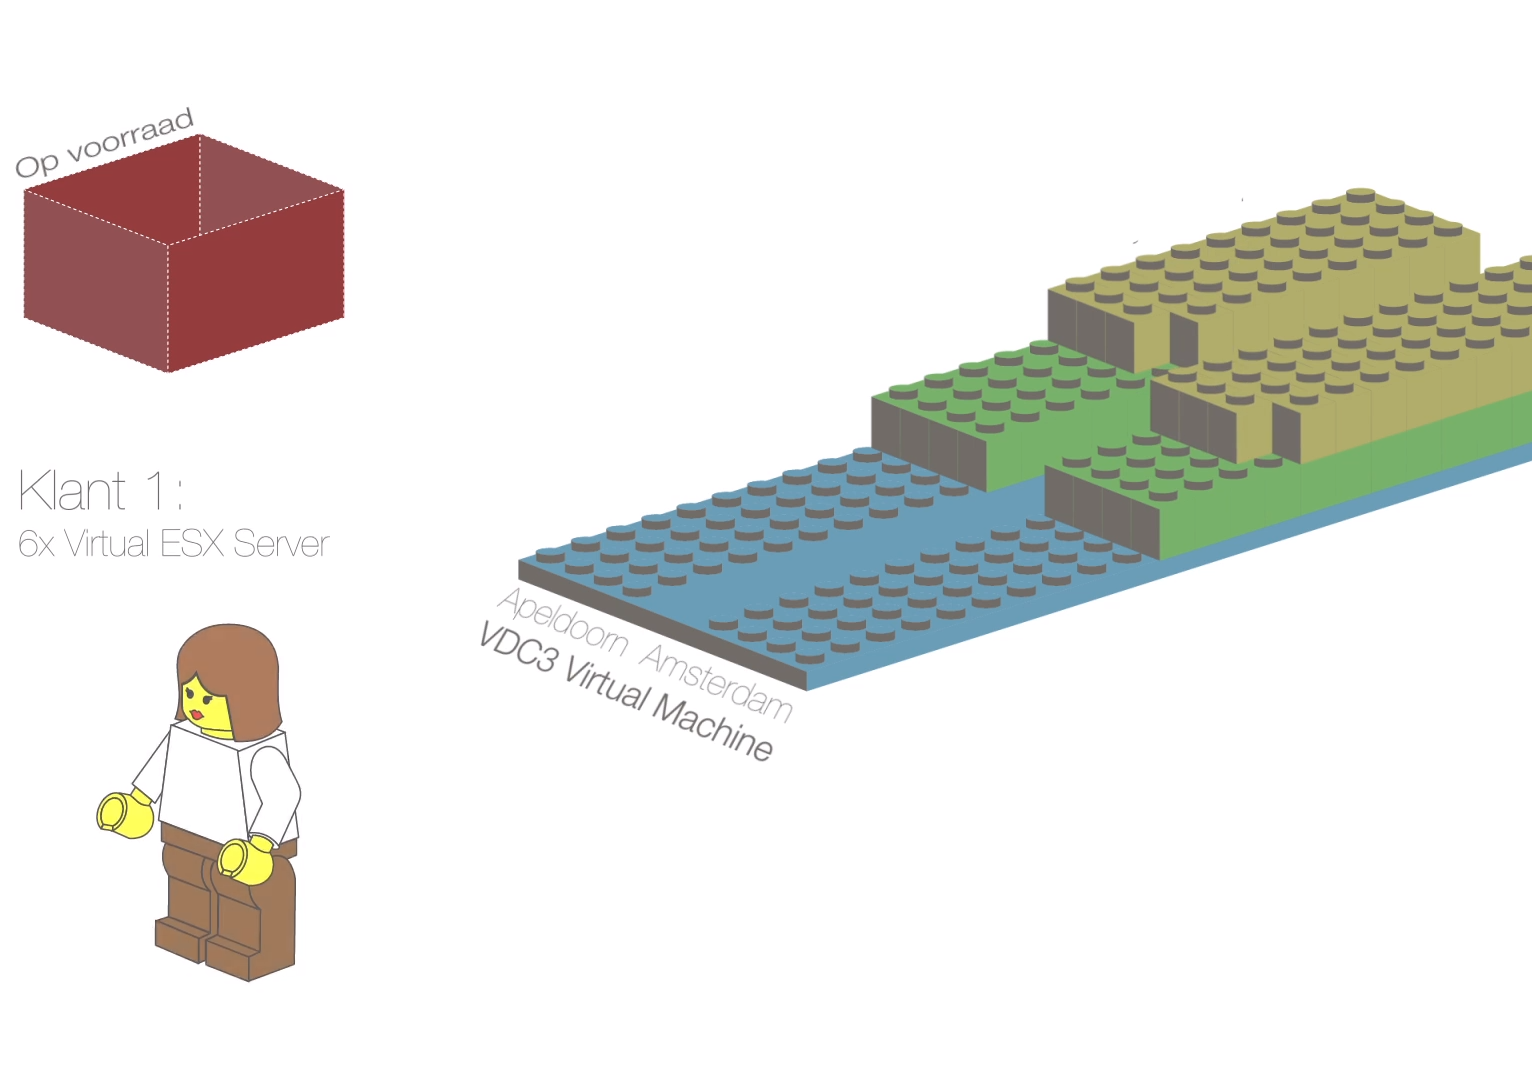 flexpod-as-lego-bricks-featured-image